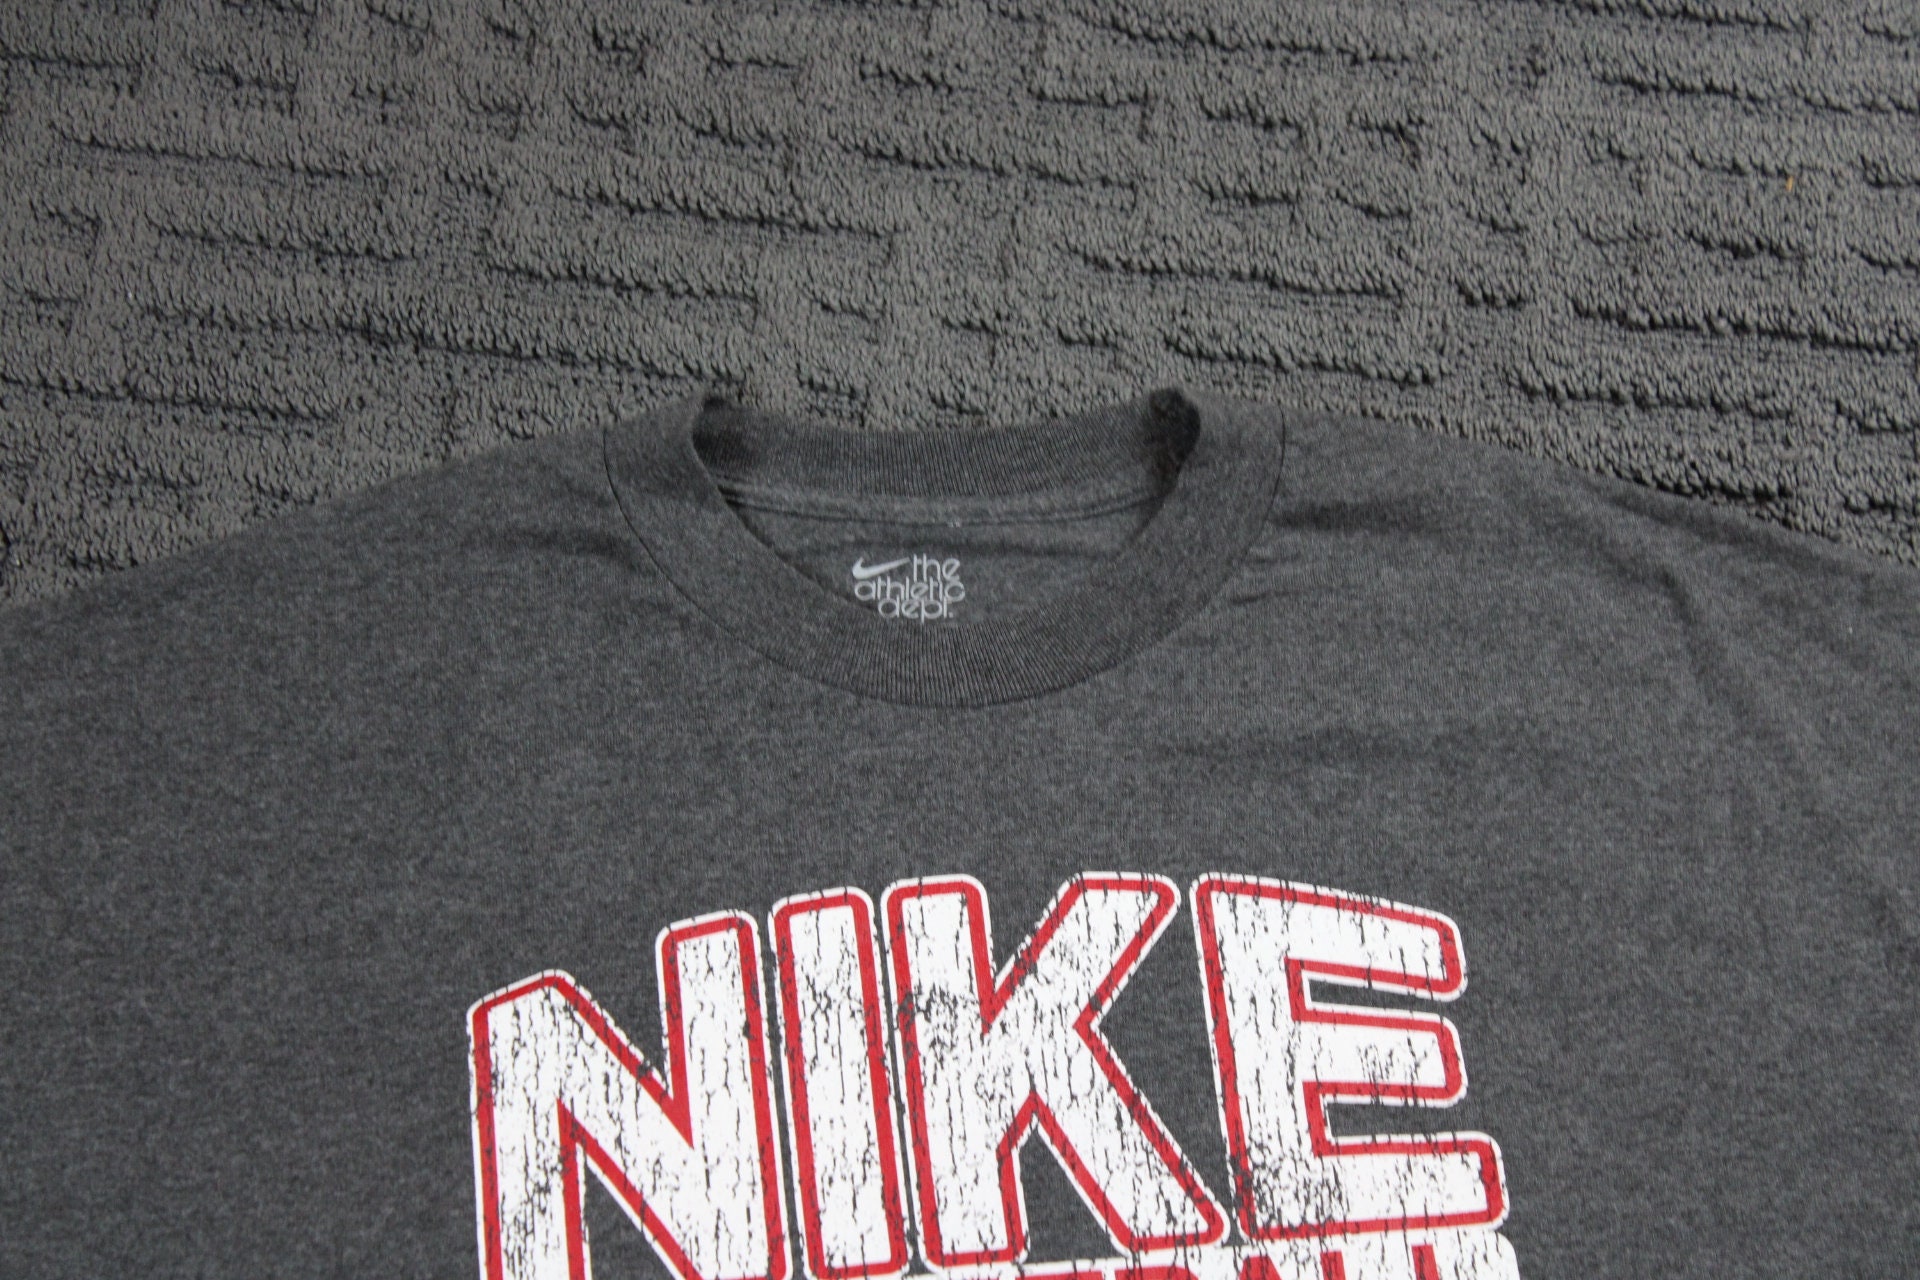 Nike Basketball T Shirt Vintage Graphic Tee Shirt 90s Hip Etsy